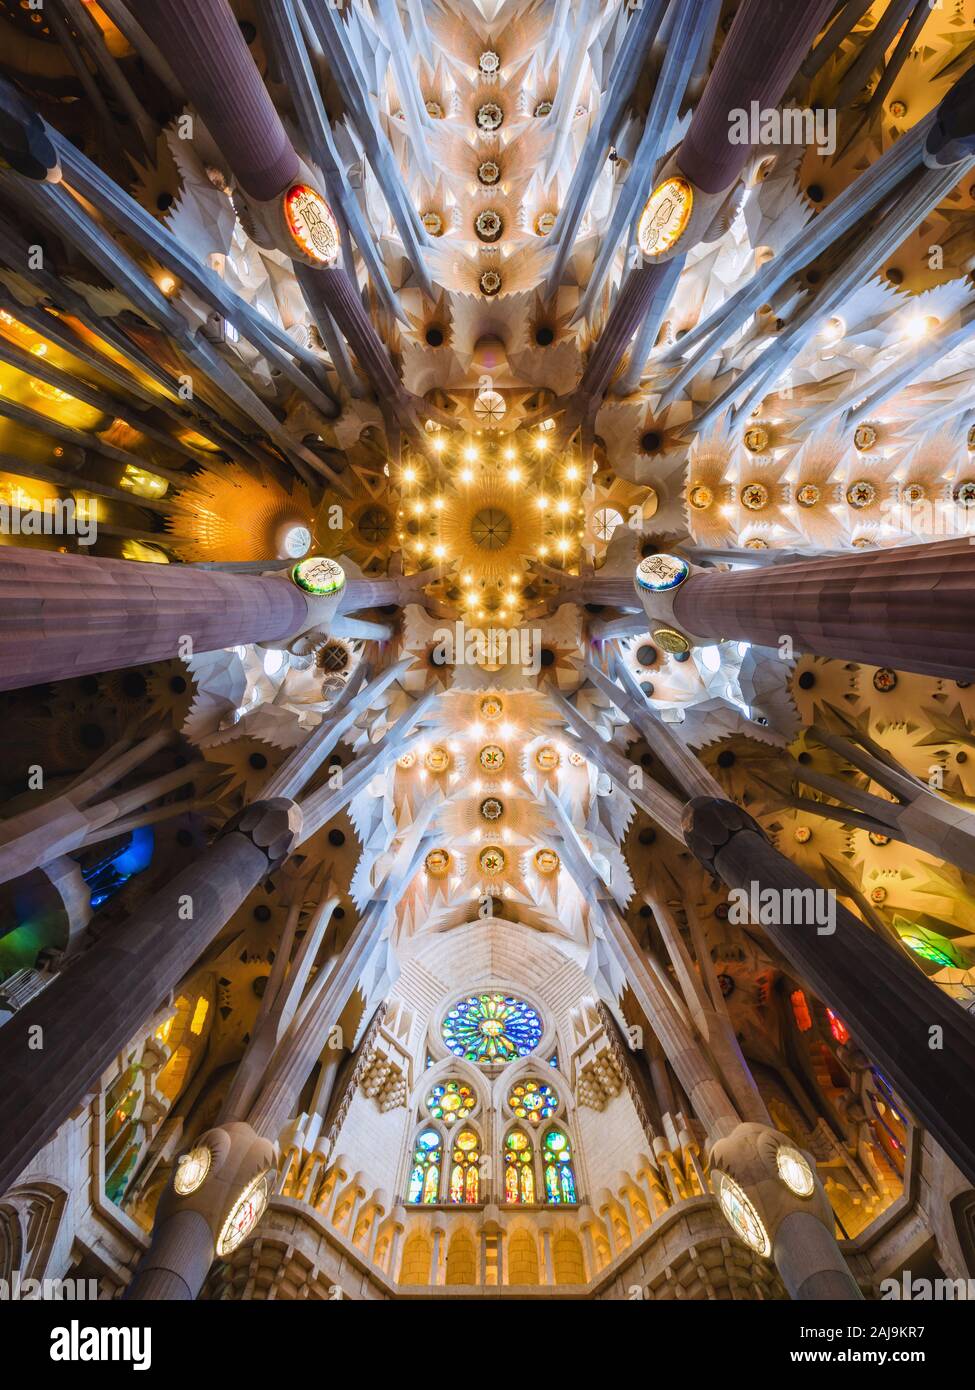 Interiors of architectural landmark La Sagrada Familia cathedral, designed by Catalan architect Antoni Gaudi in Barcelona, Spain. Stock Photo